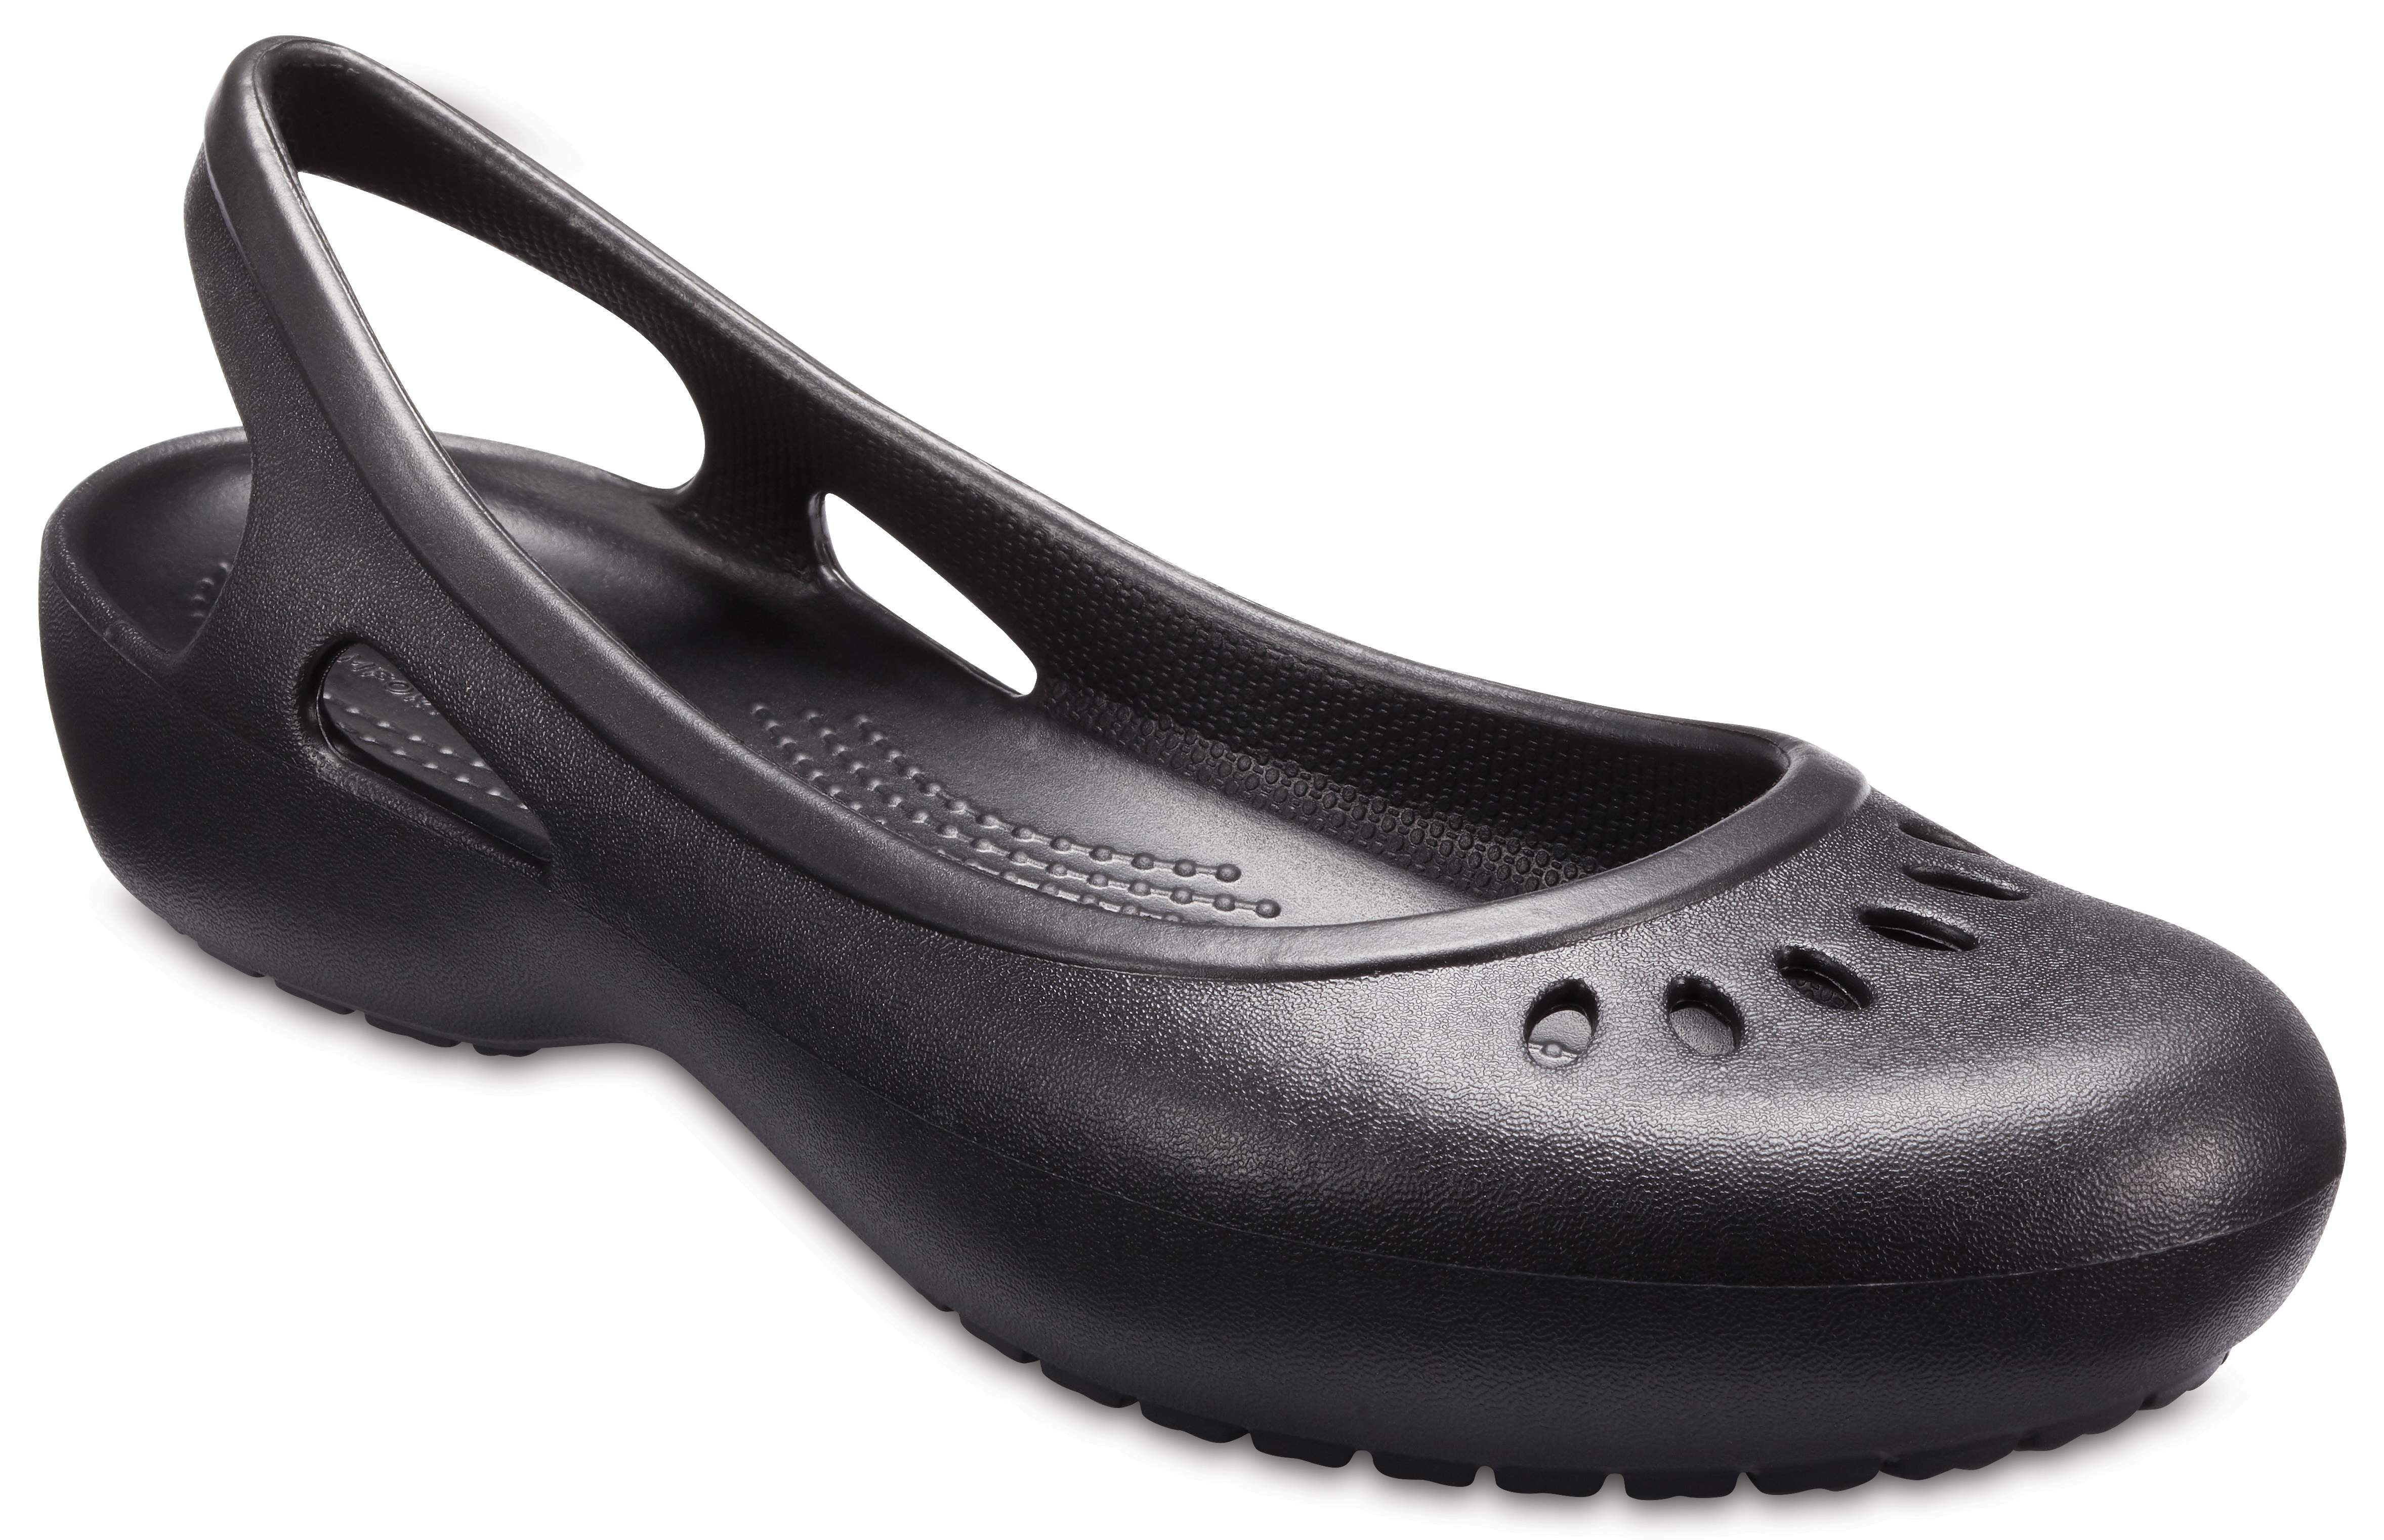 womens gray crocs